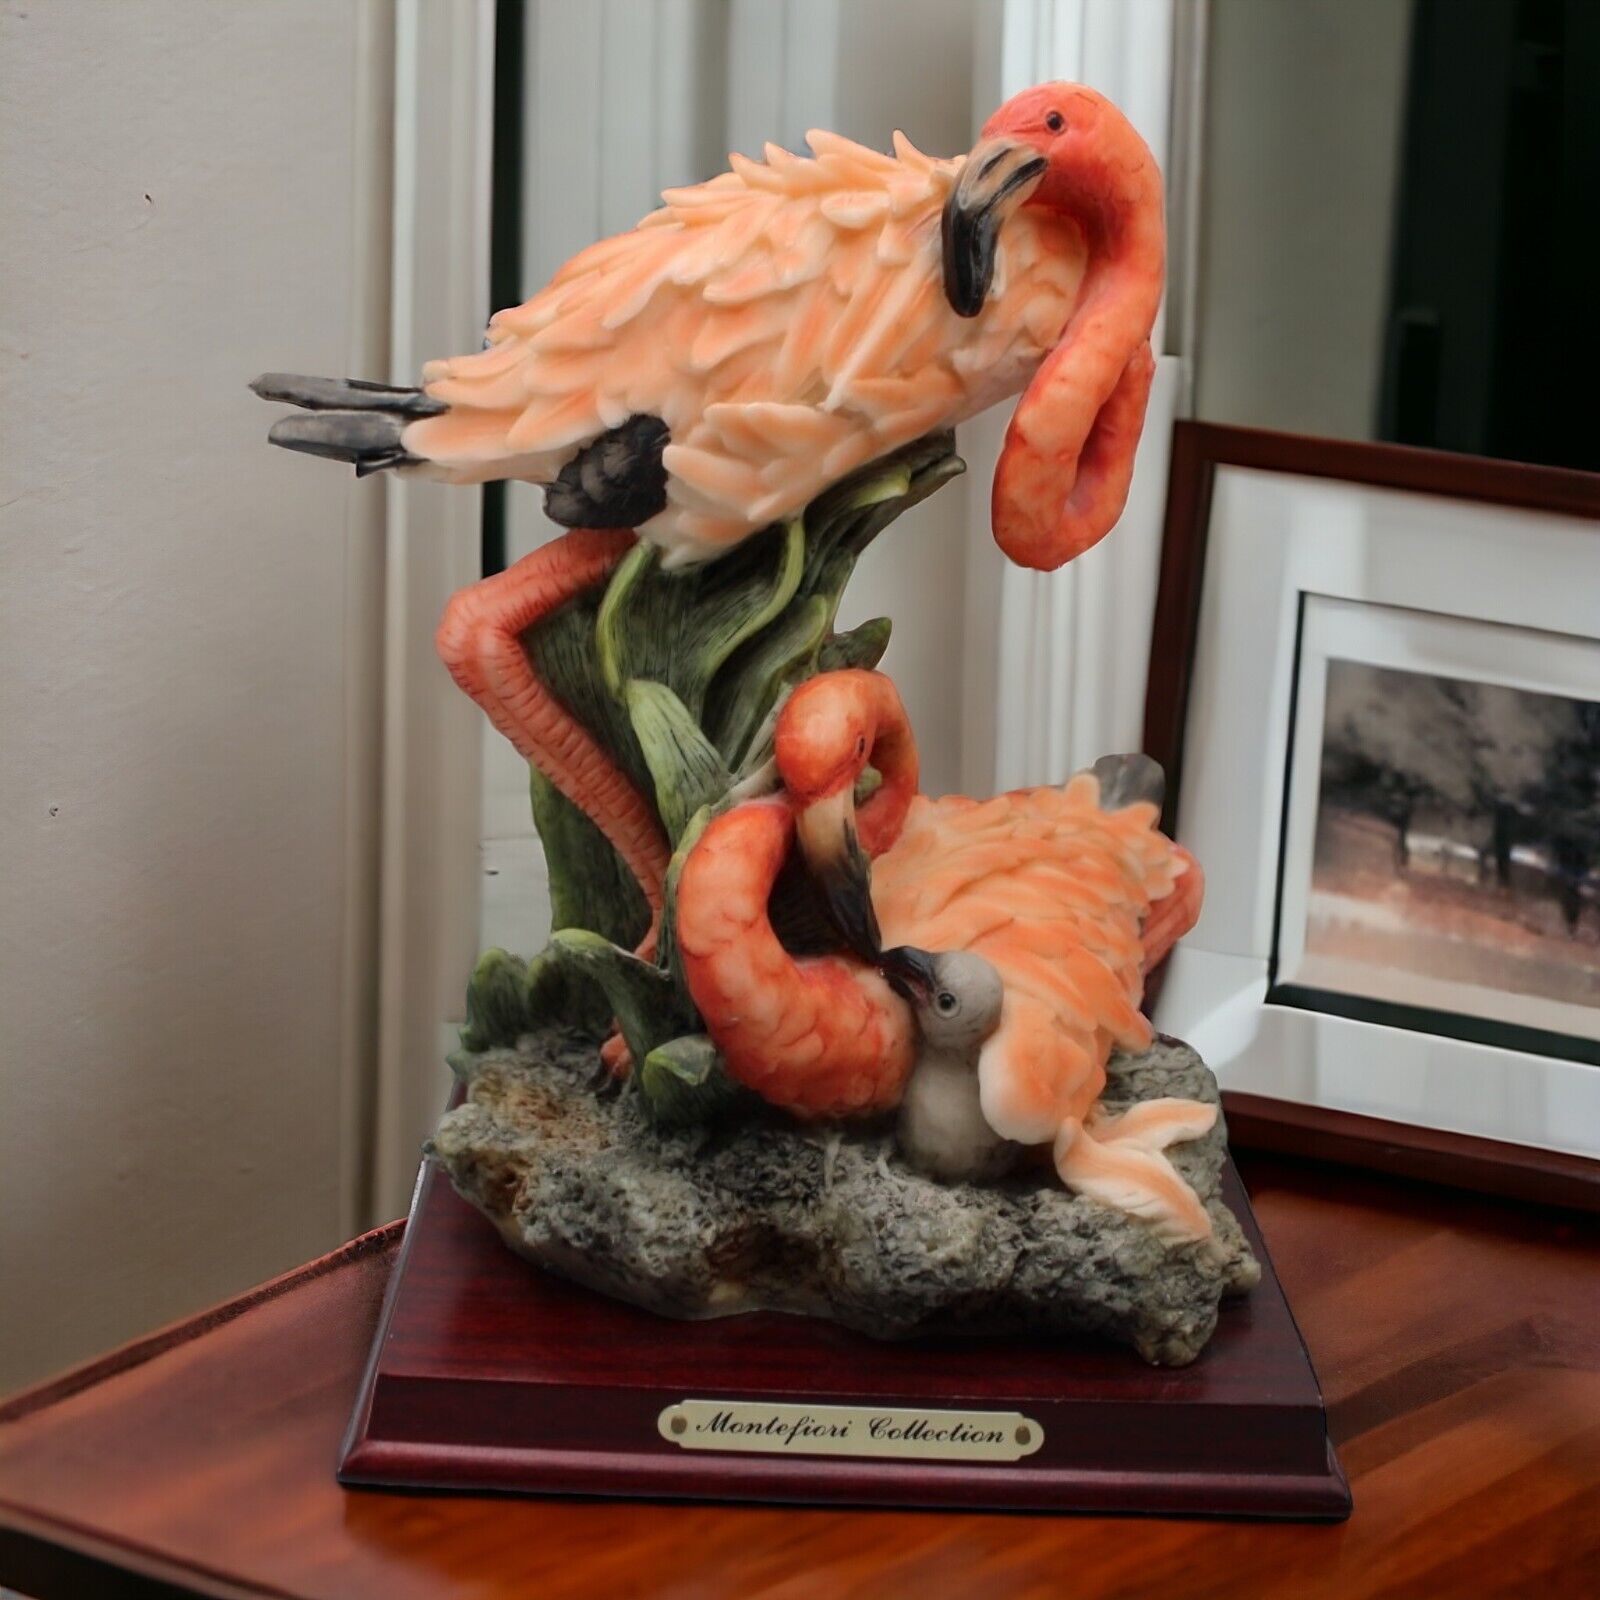 Montefiori Collection Pink Flamingo Family Statue Figurine Sculpture 